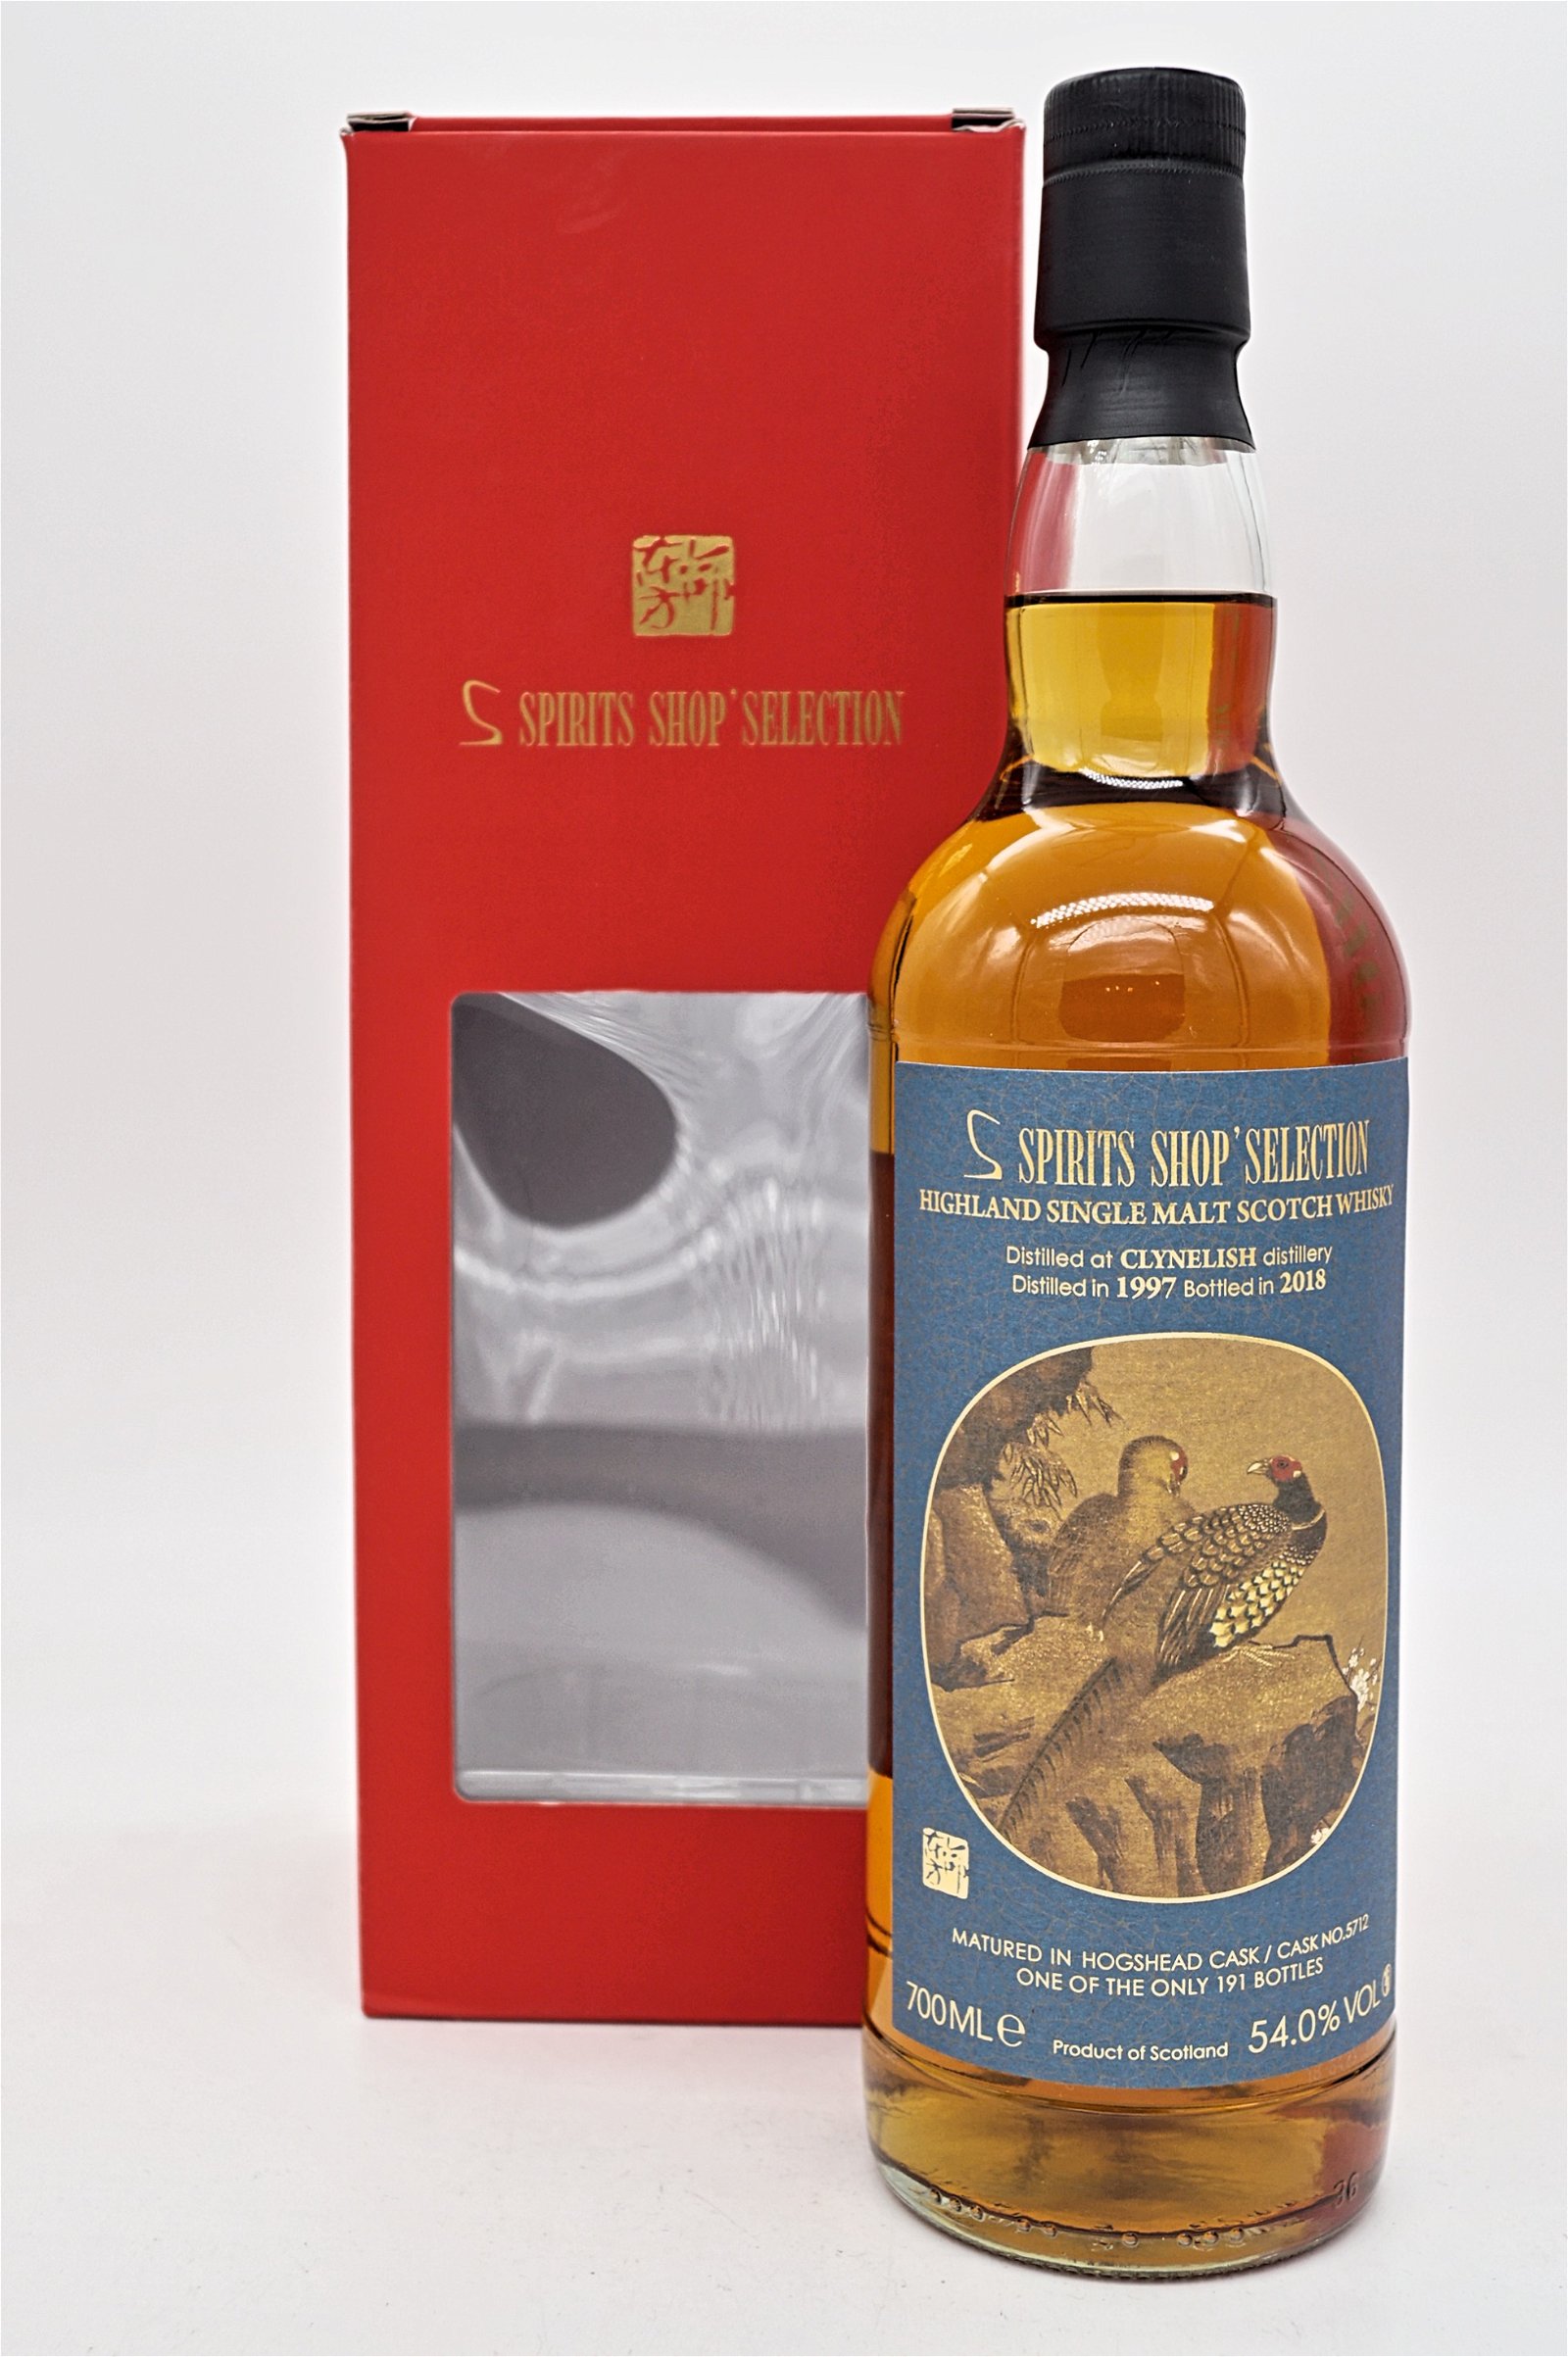 S-Spirits Shop Selection 21 Jahre Clynelish 1997/2018 Hogshead #5712 Single Cask Highland Single Malt Scotch Whisky